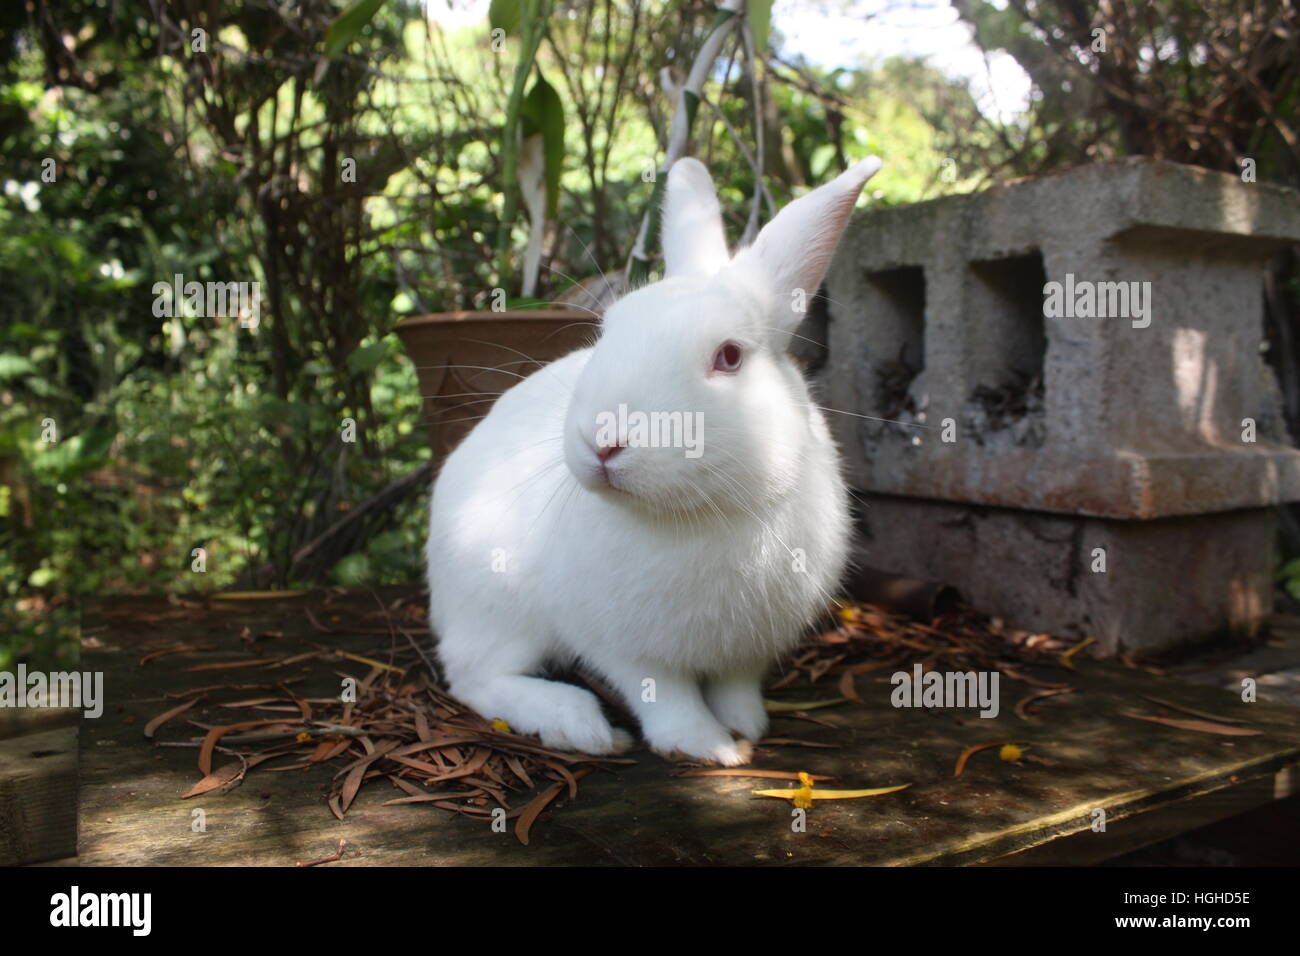 white rabbit sitting on wood plank Stock Photo